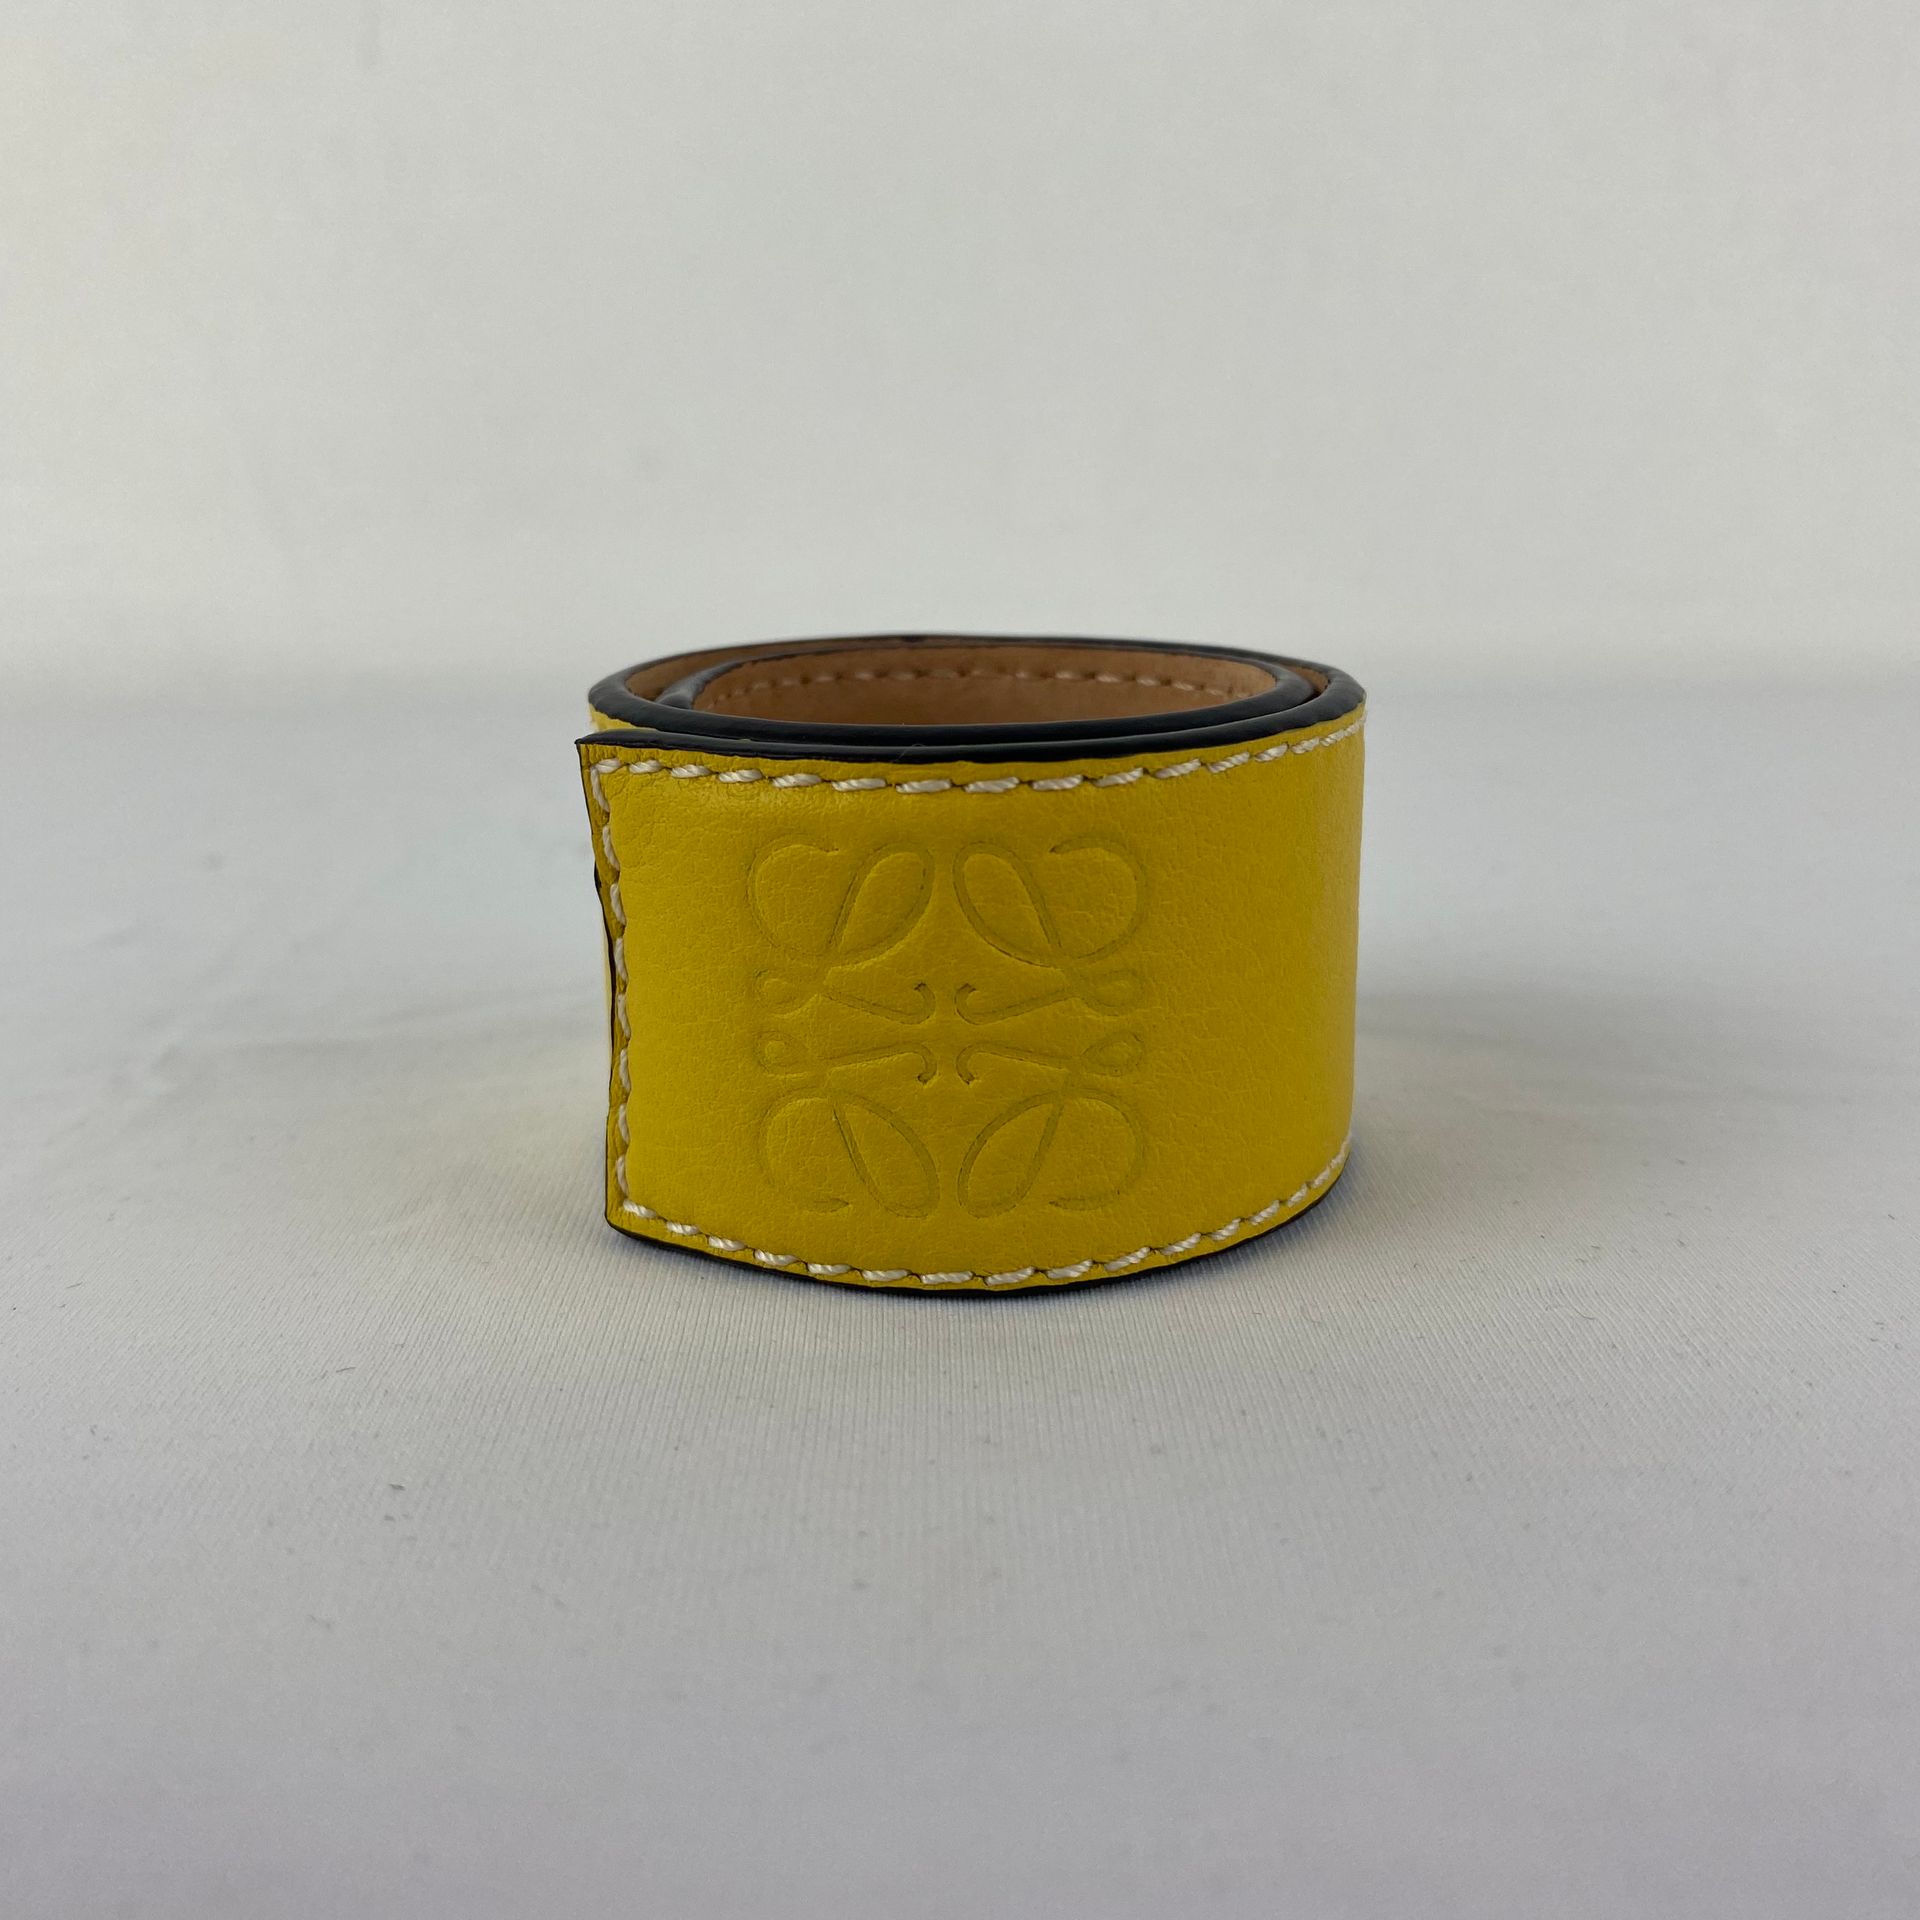 LOEWE A yellow leather LOEWE bracelet. Brand new in the box